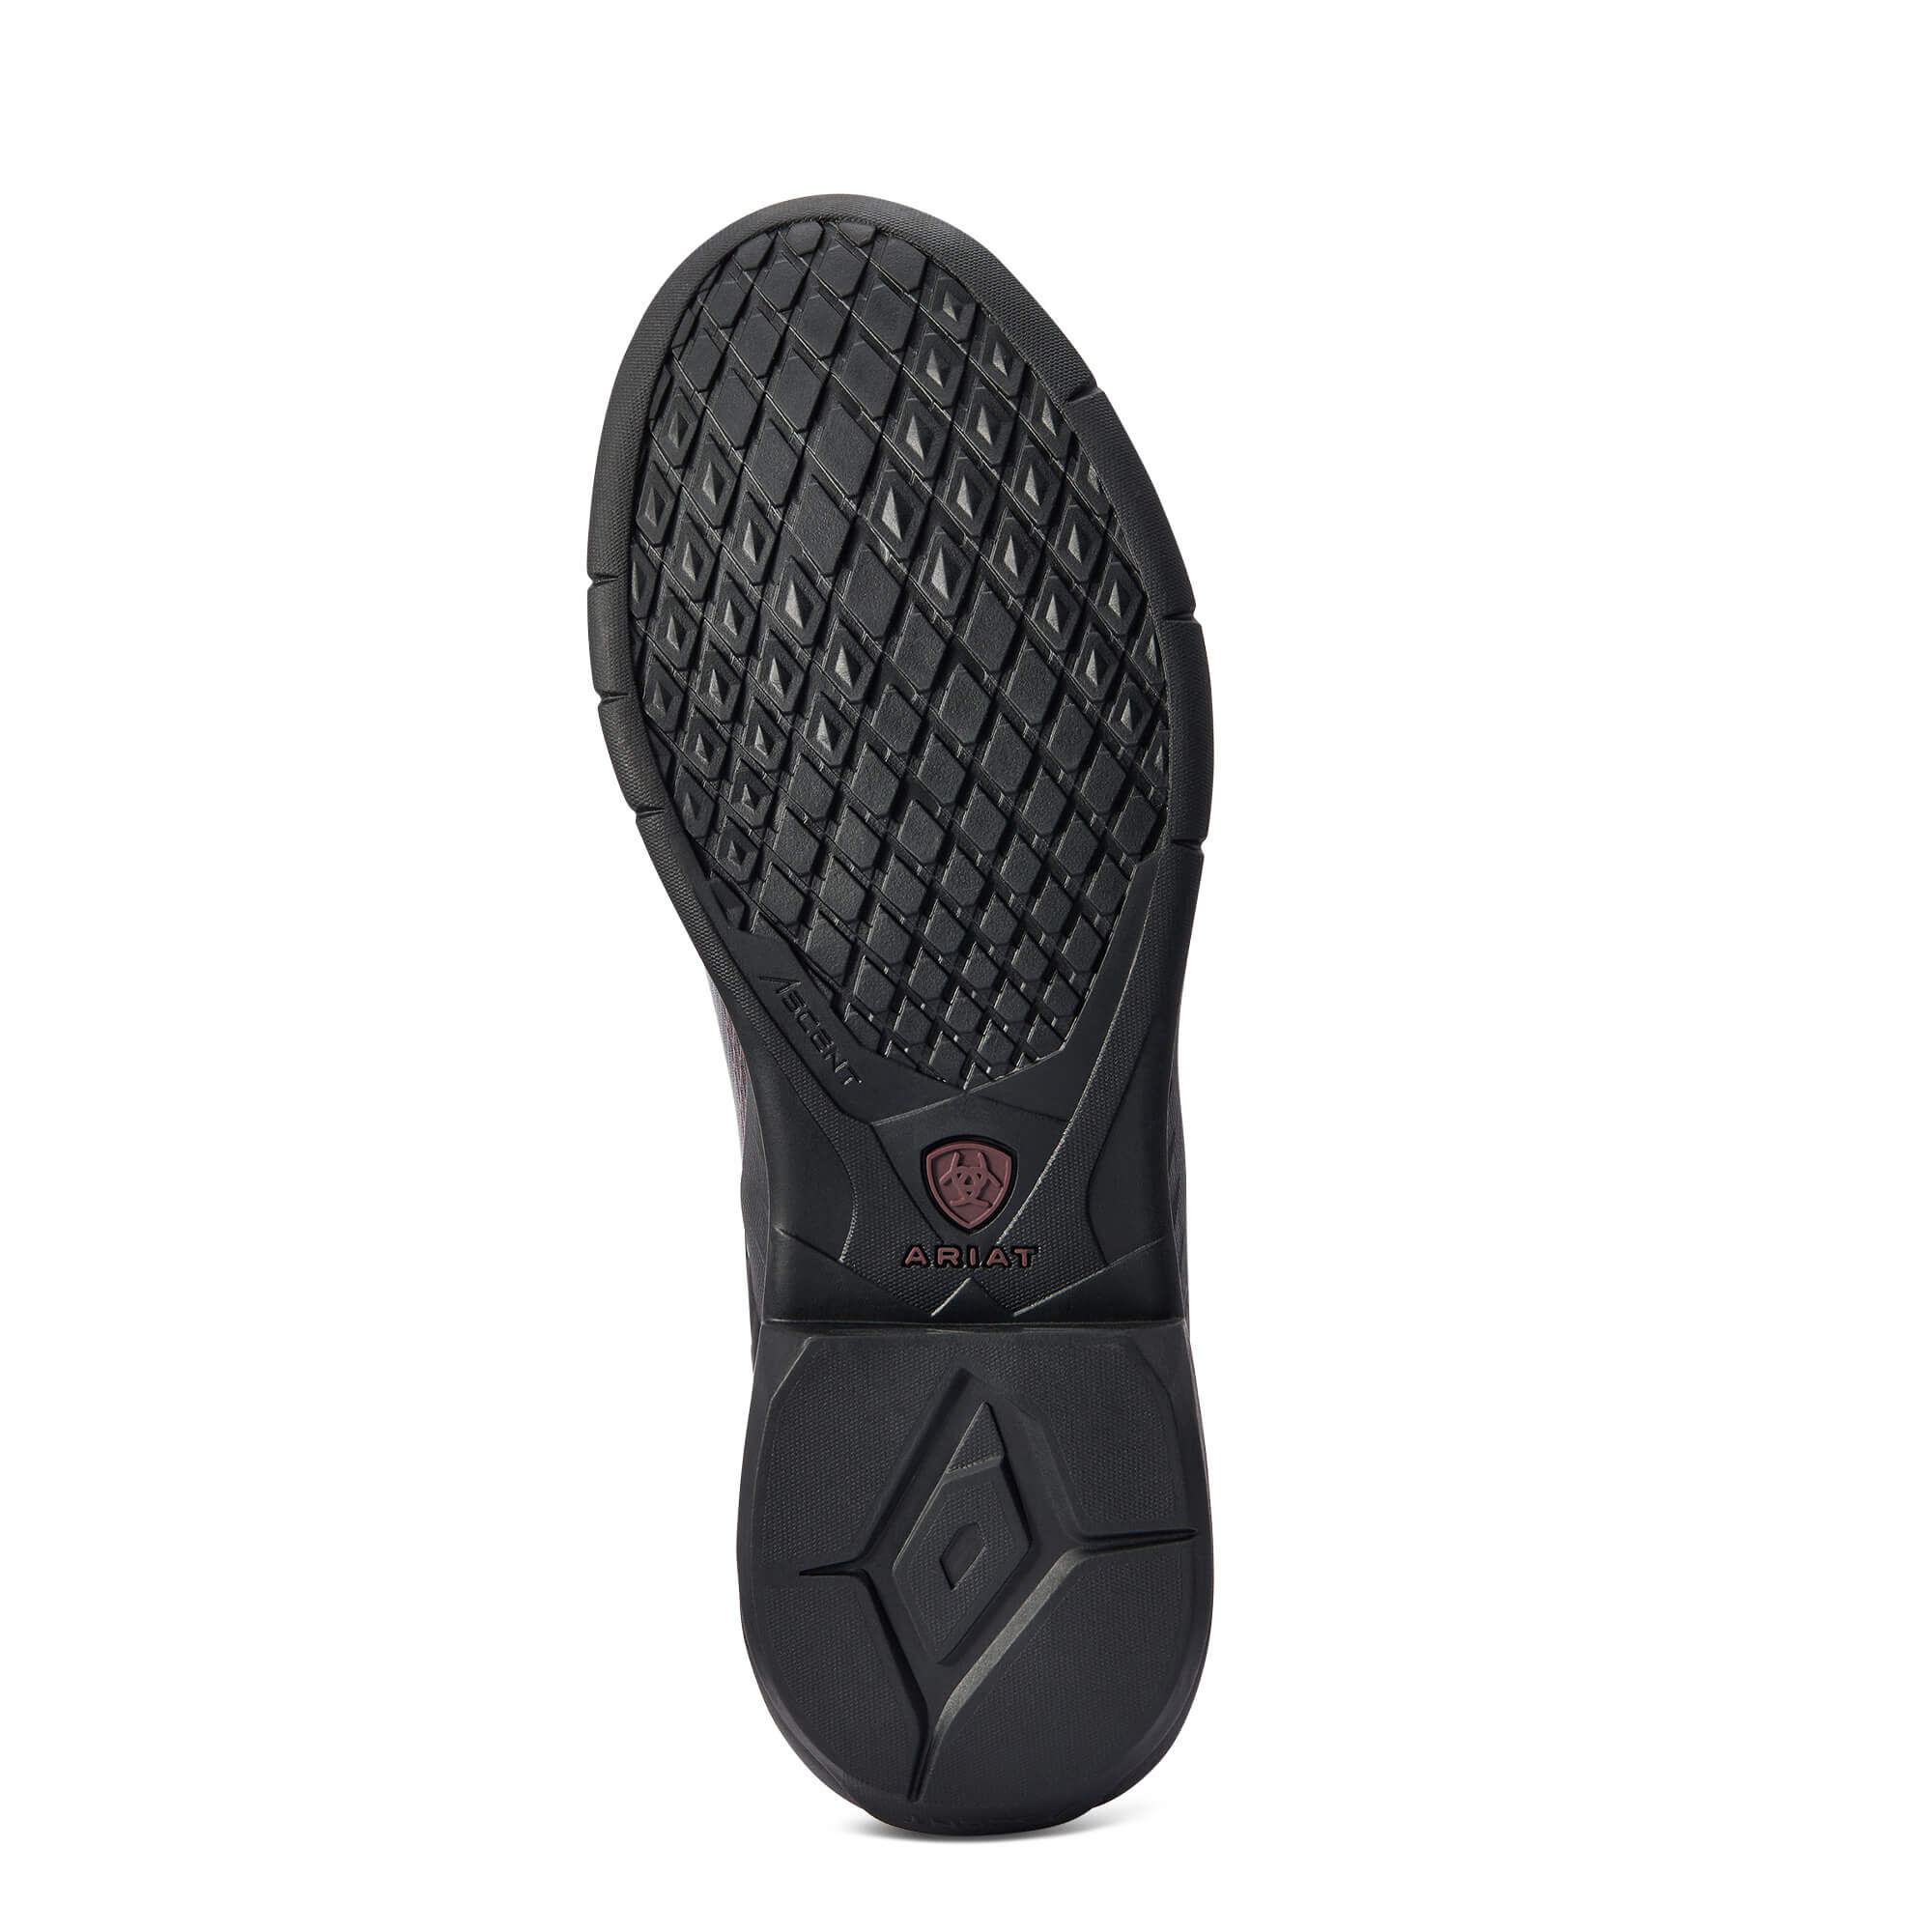 Sizes 4.5 to 7 UK Ariat Ascent Women's Paddock Jodhpur Boots Black 